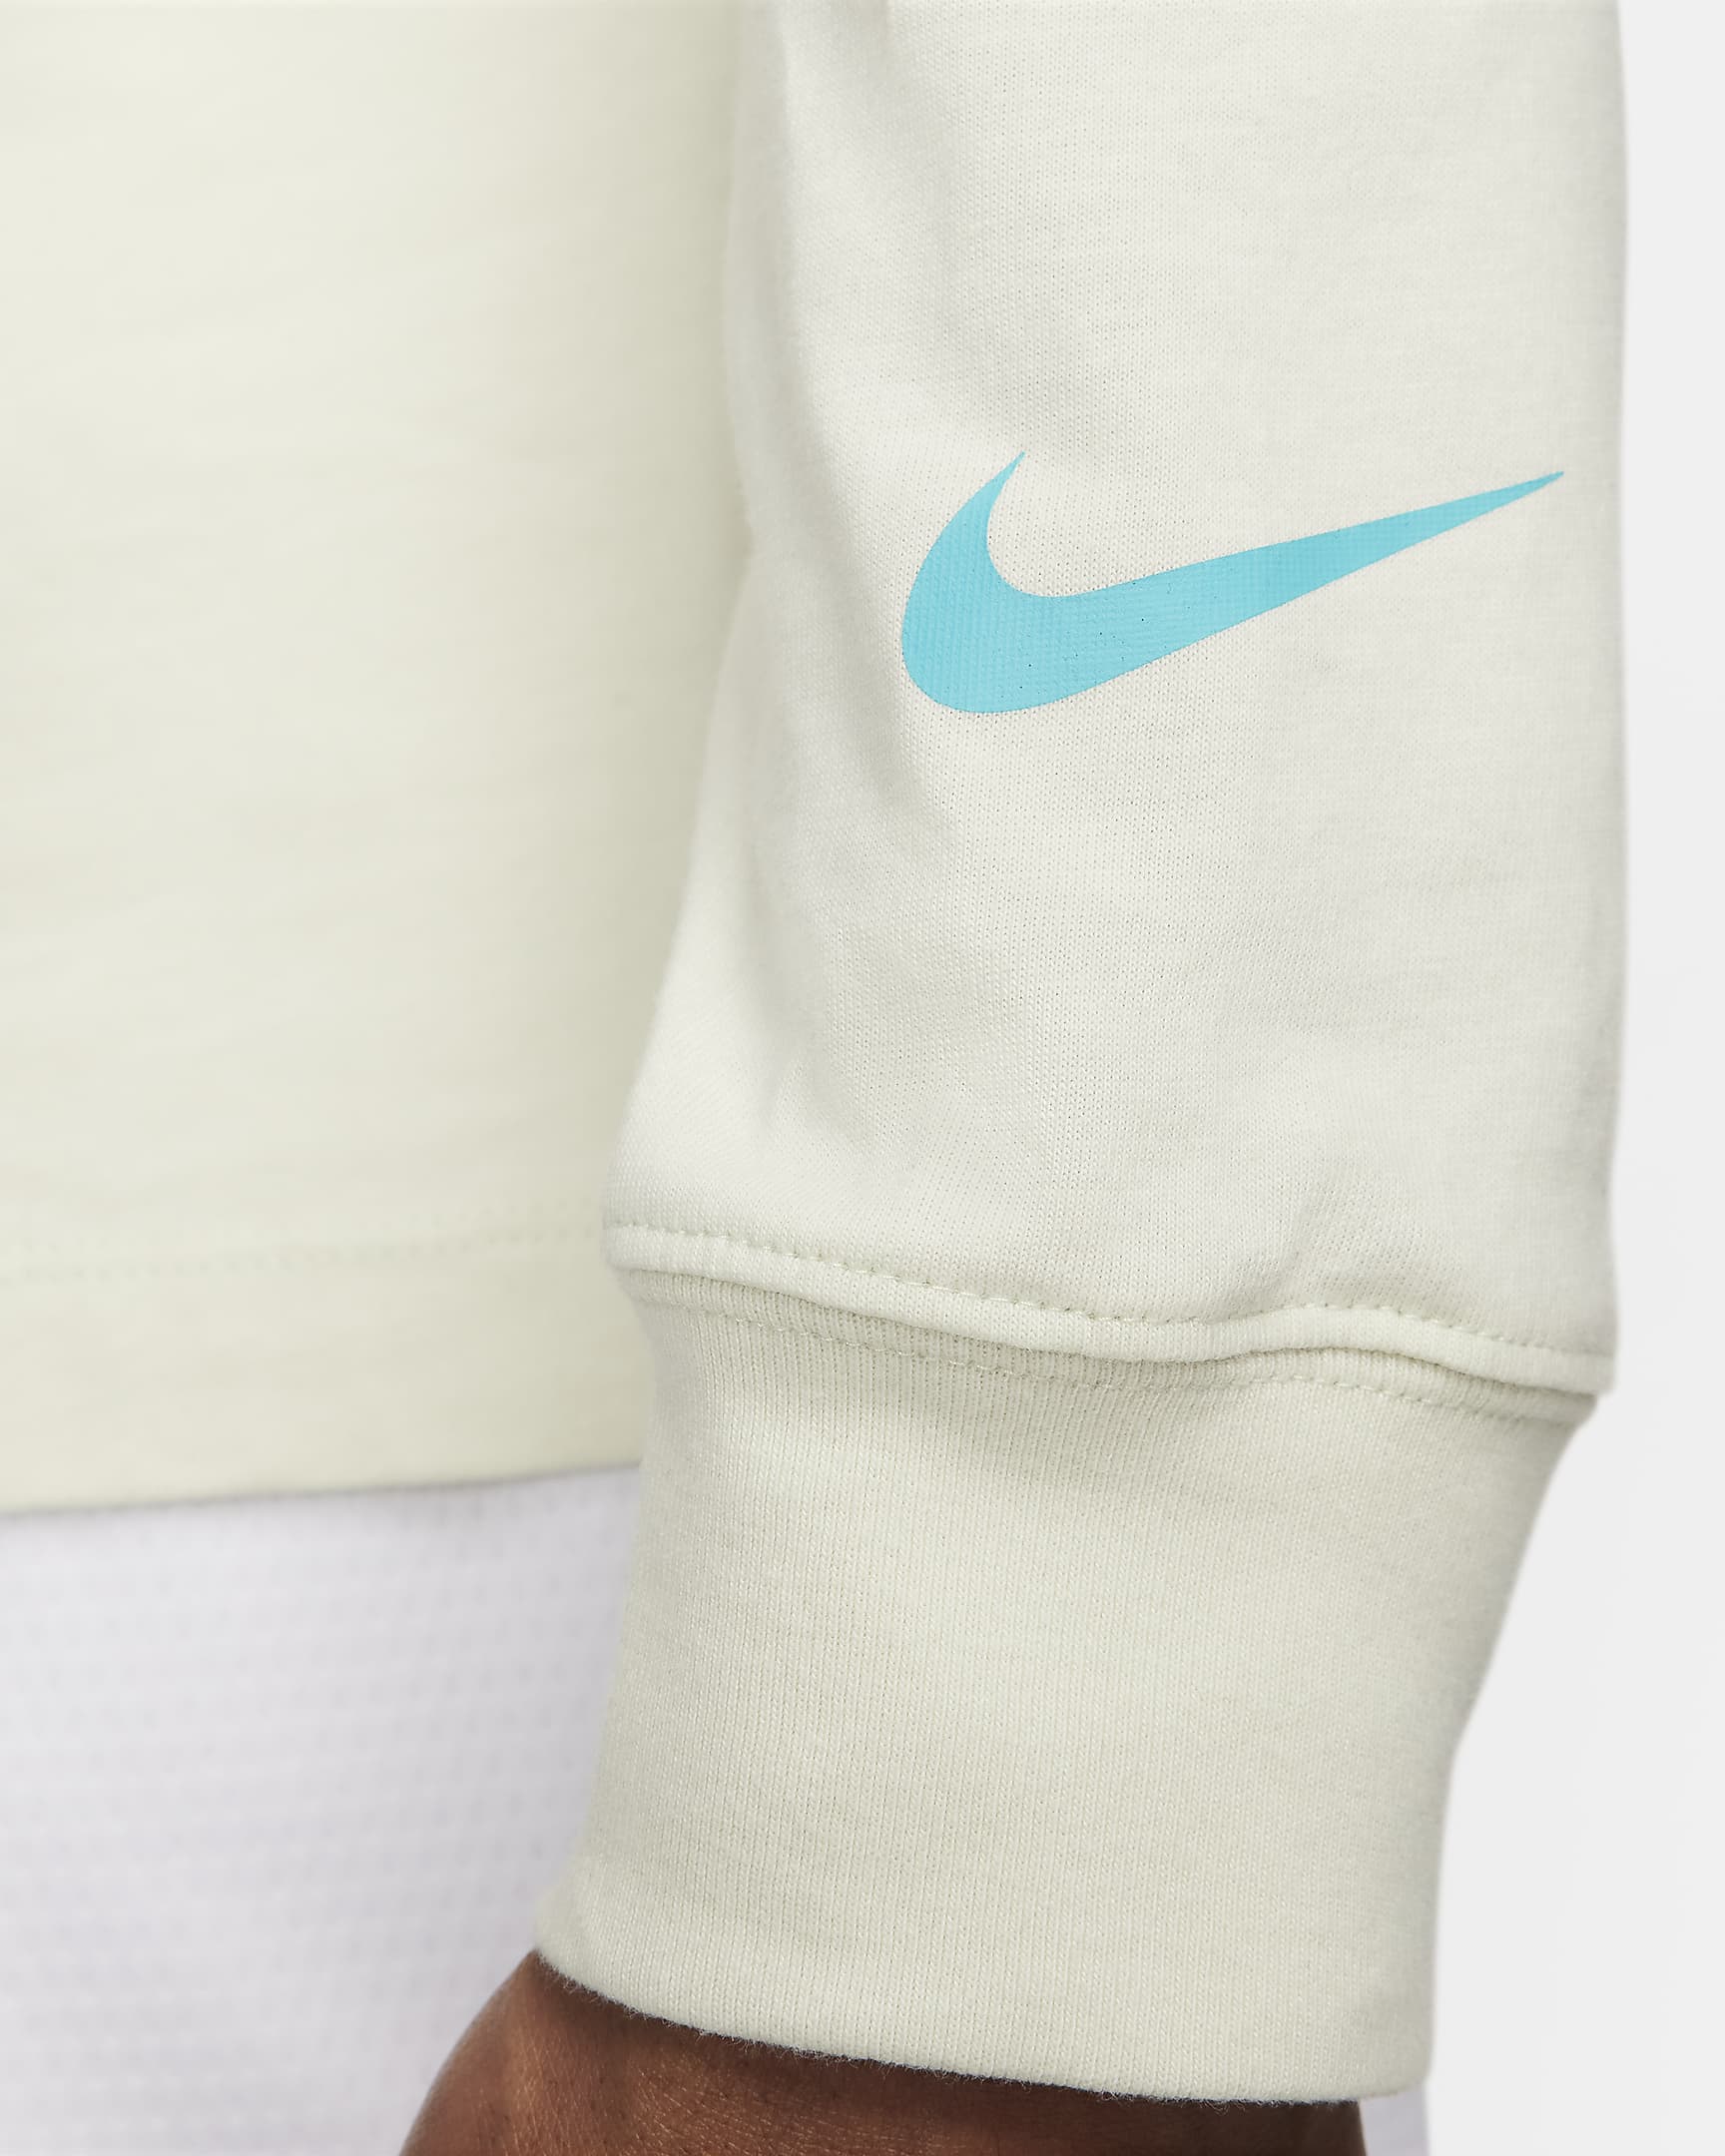 LeBron Men's Long-Sleeve T-Shirt. Nike.com